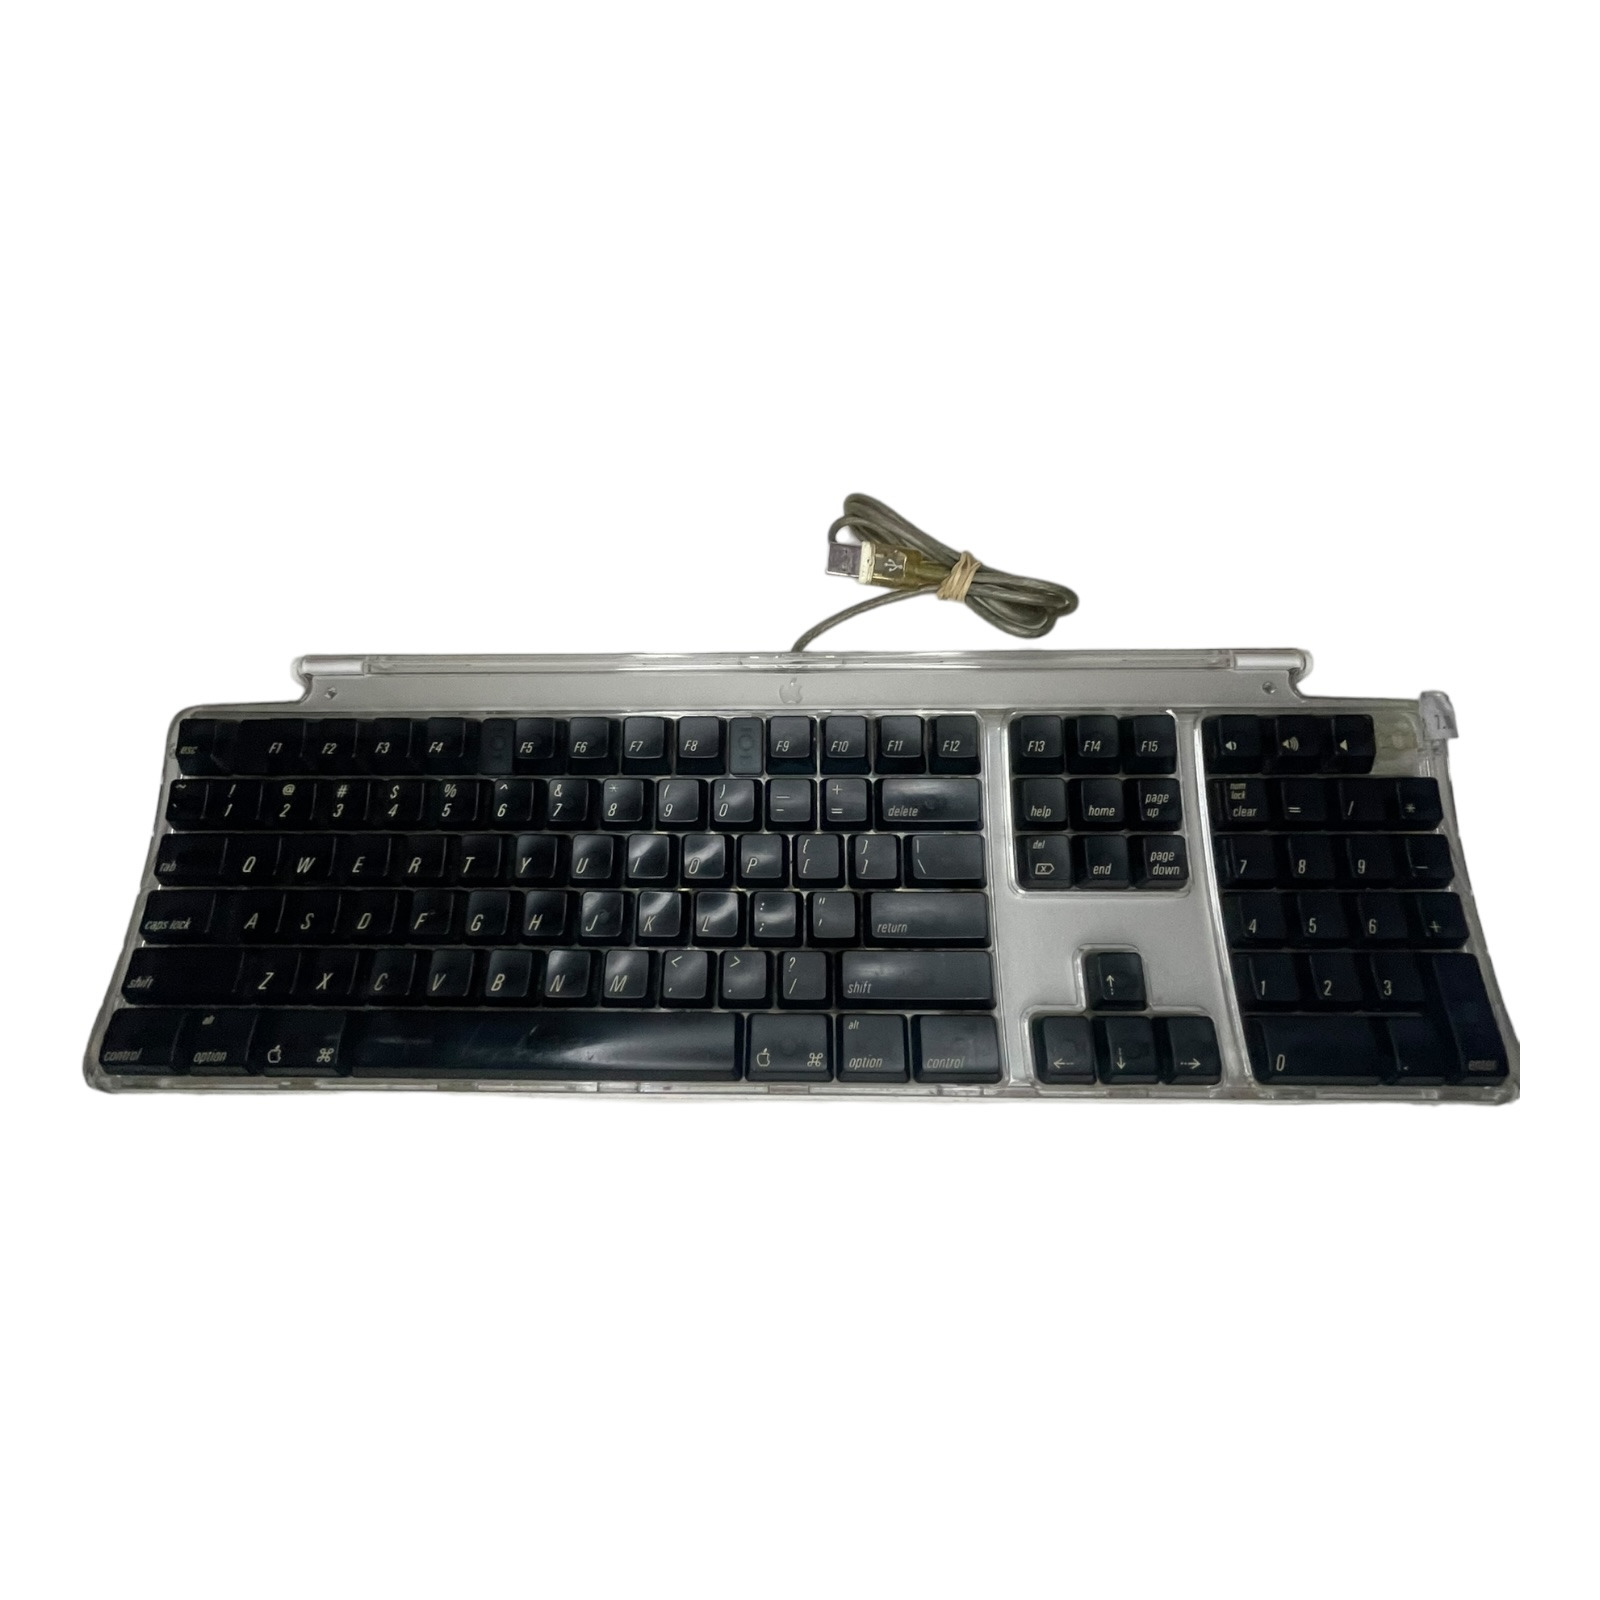 Apple Vintage Keyboard Desktop Imac Clear Black Keys M7803 Lot Of 3